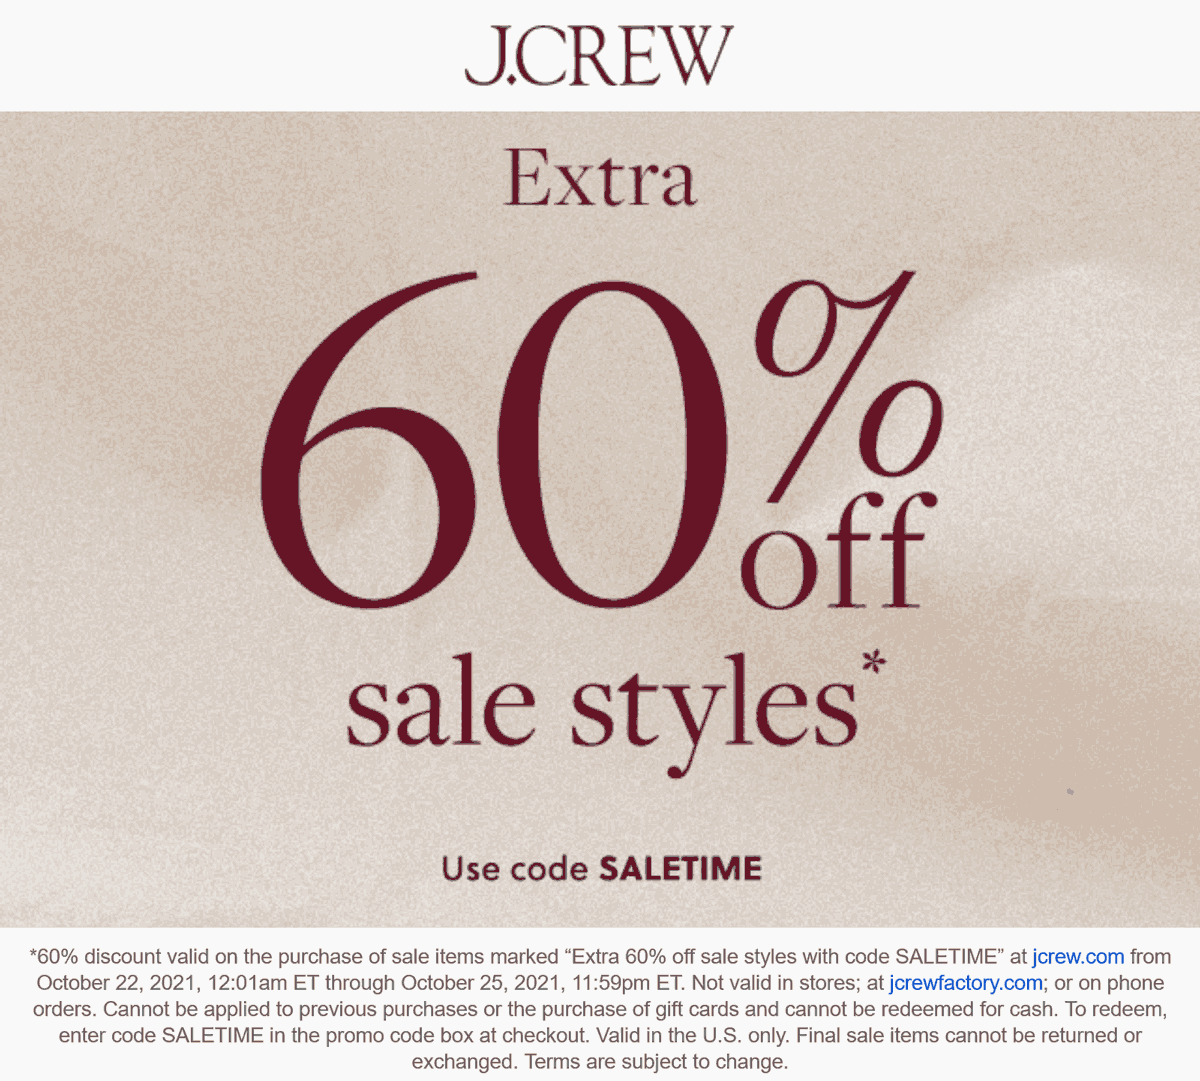 J.Crew stores Coupon  Extra 60% off sale styles online at J.Crew via promo code SALETIME #jcrew 